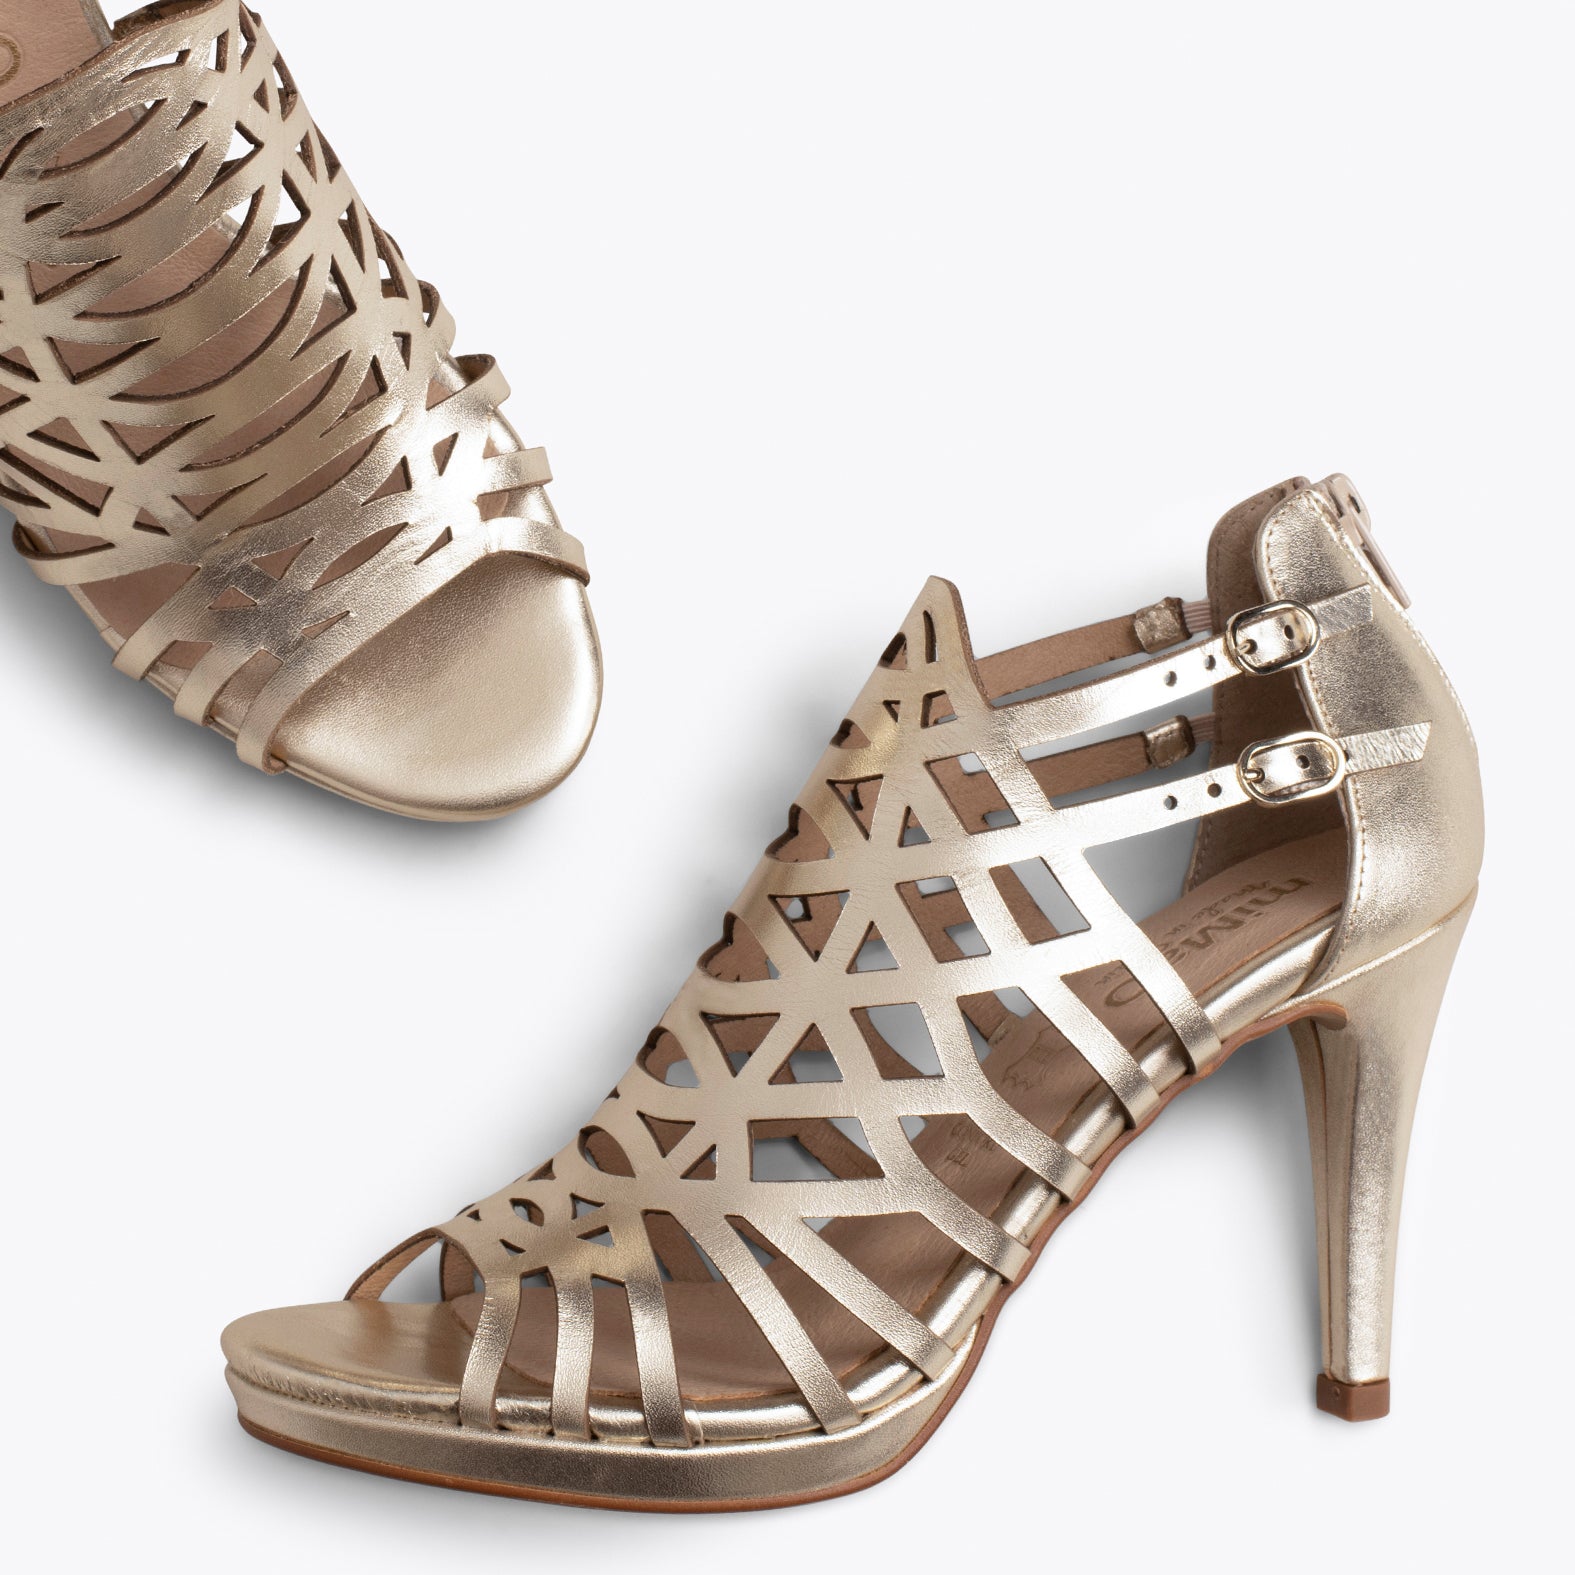 GALA – GOLDEN high heel party sandals